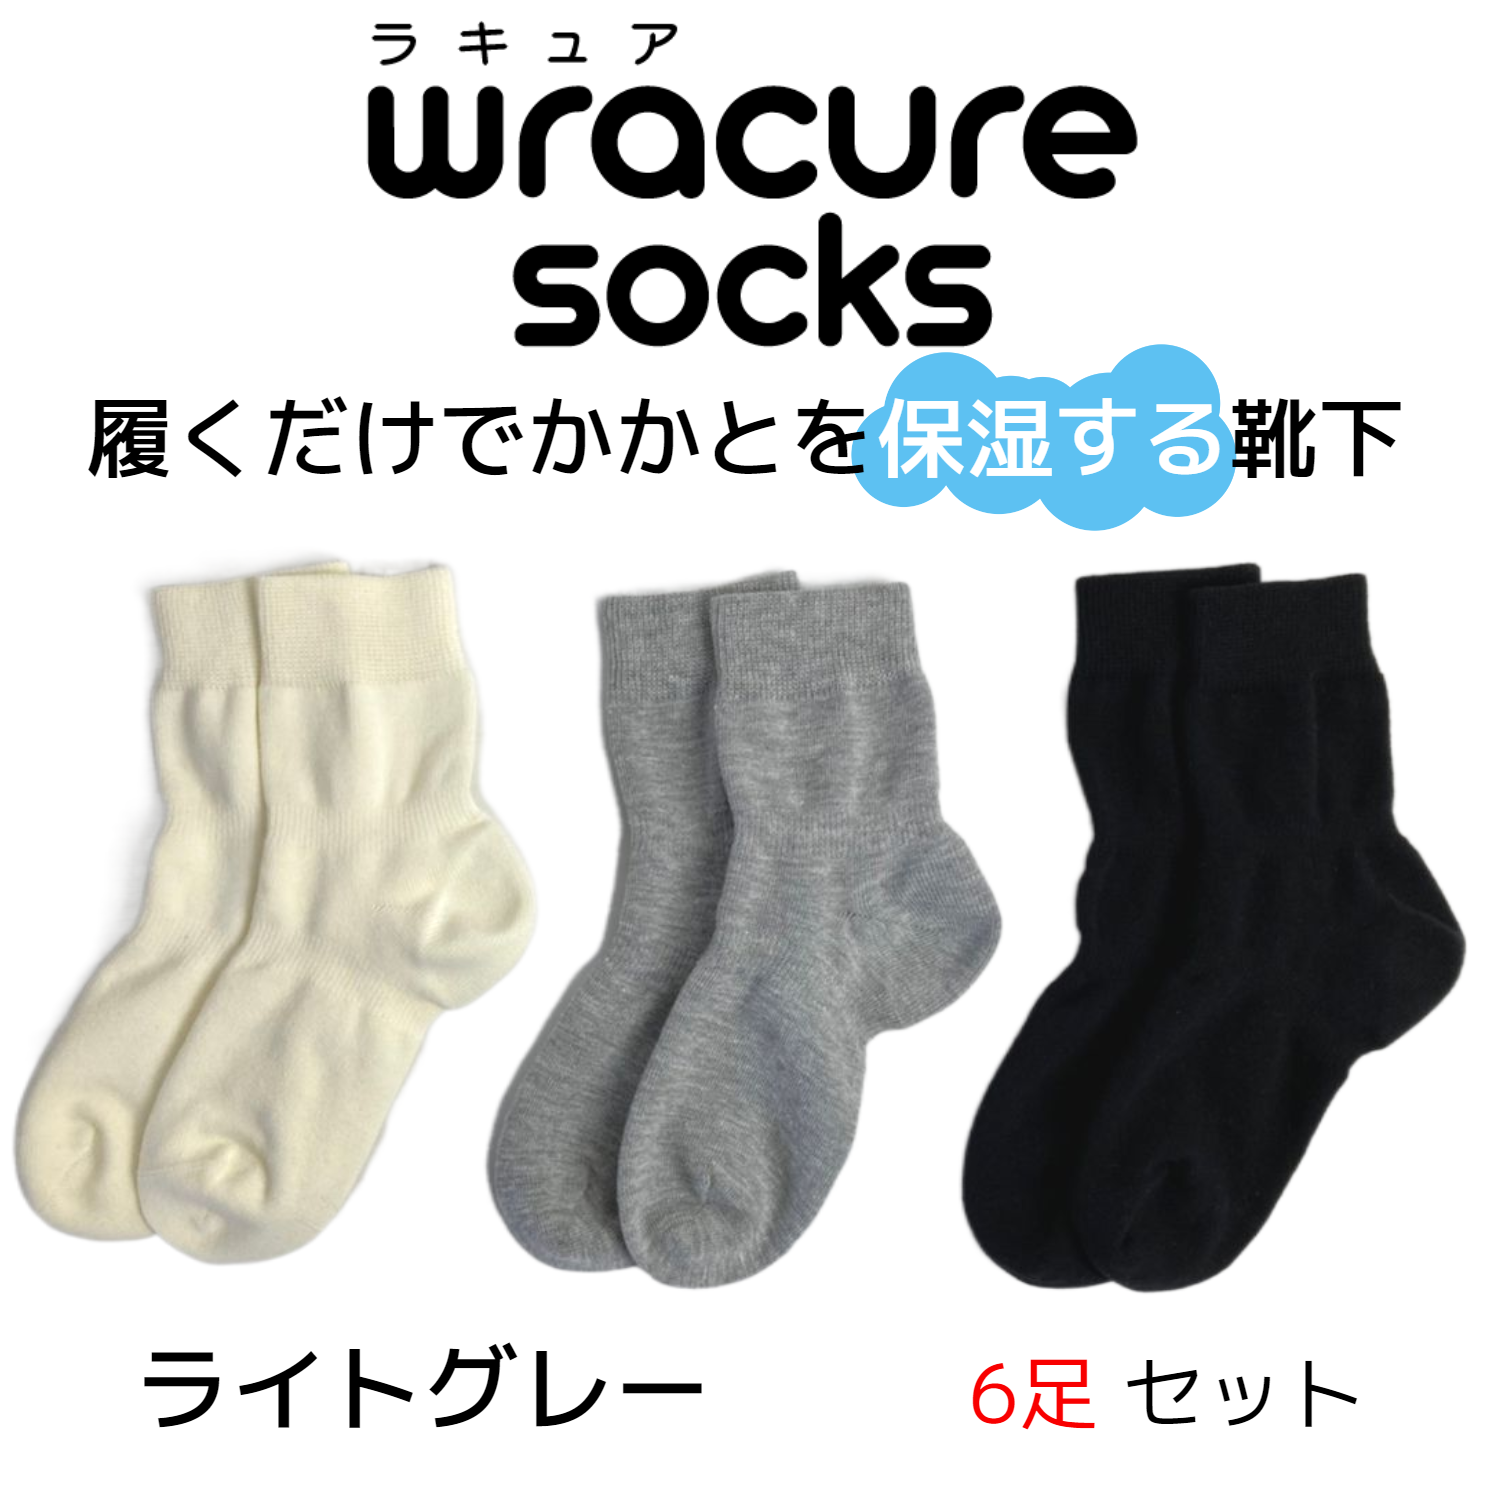 wracure socks ラキュアソックス【ライトグレー】履くだけでかかと保湿出来る靴下